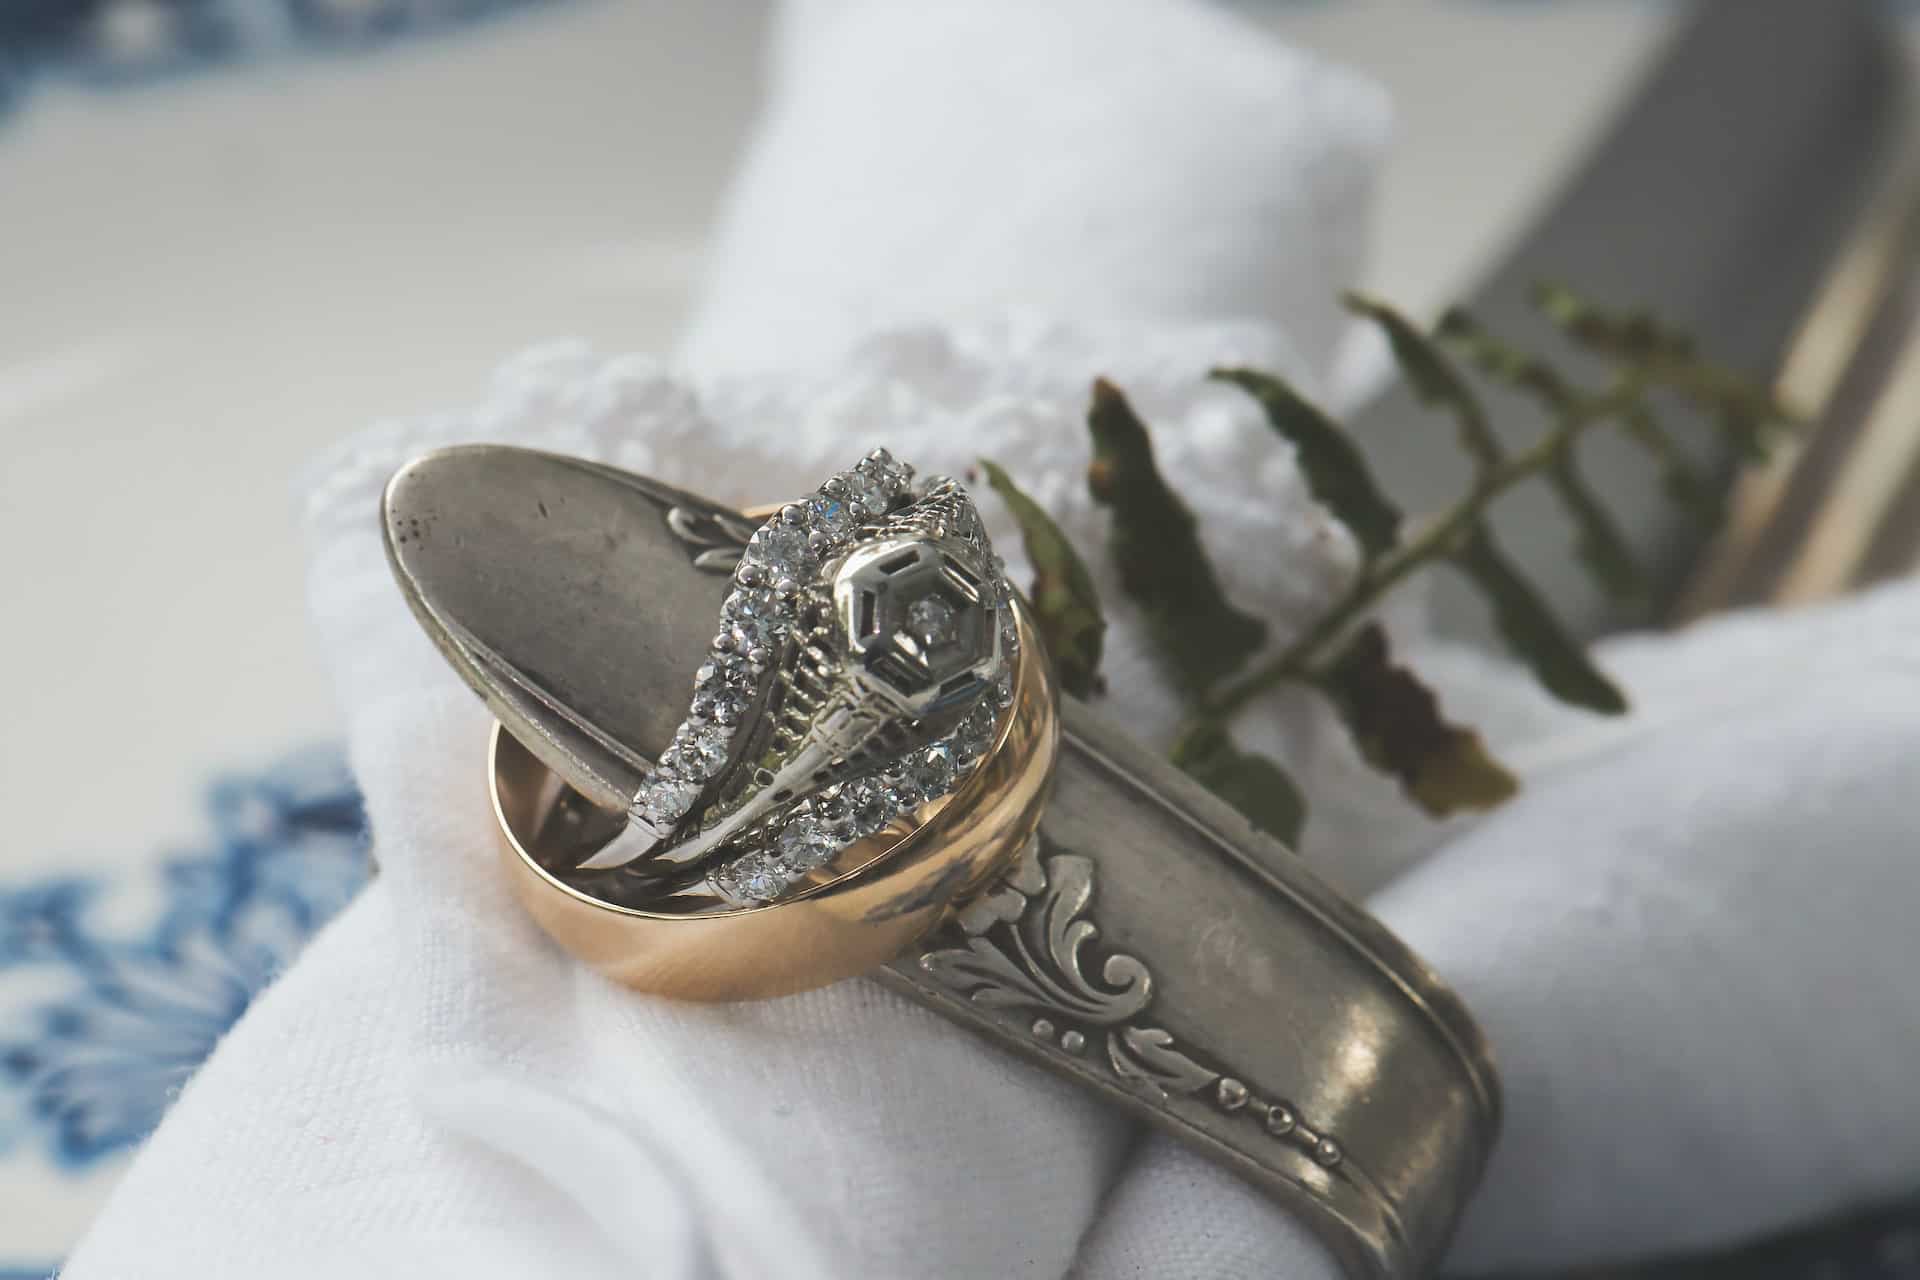 A tarnished silver sun pendant